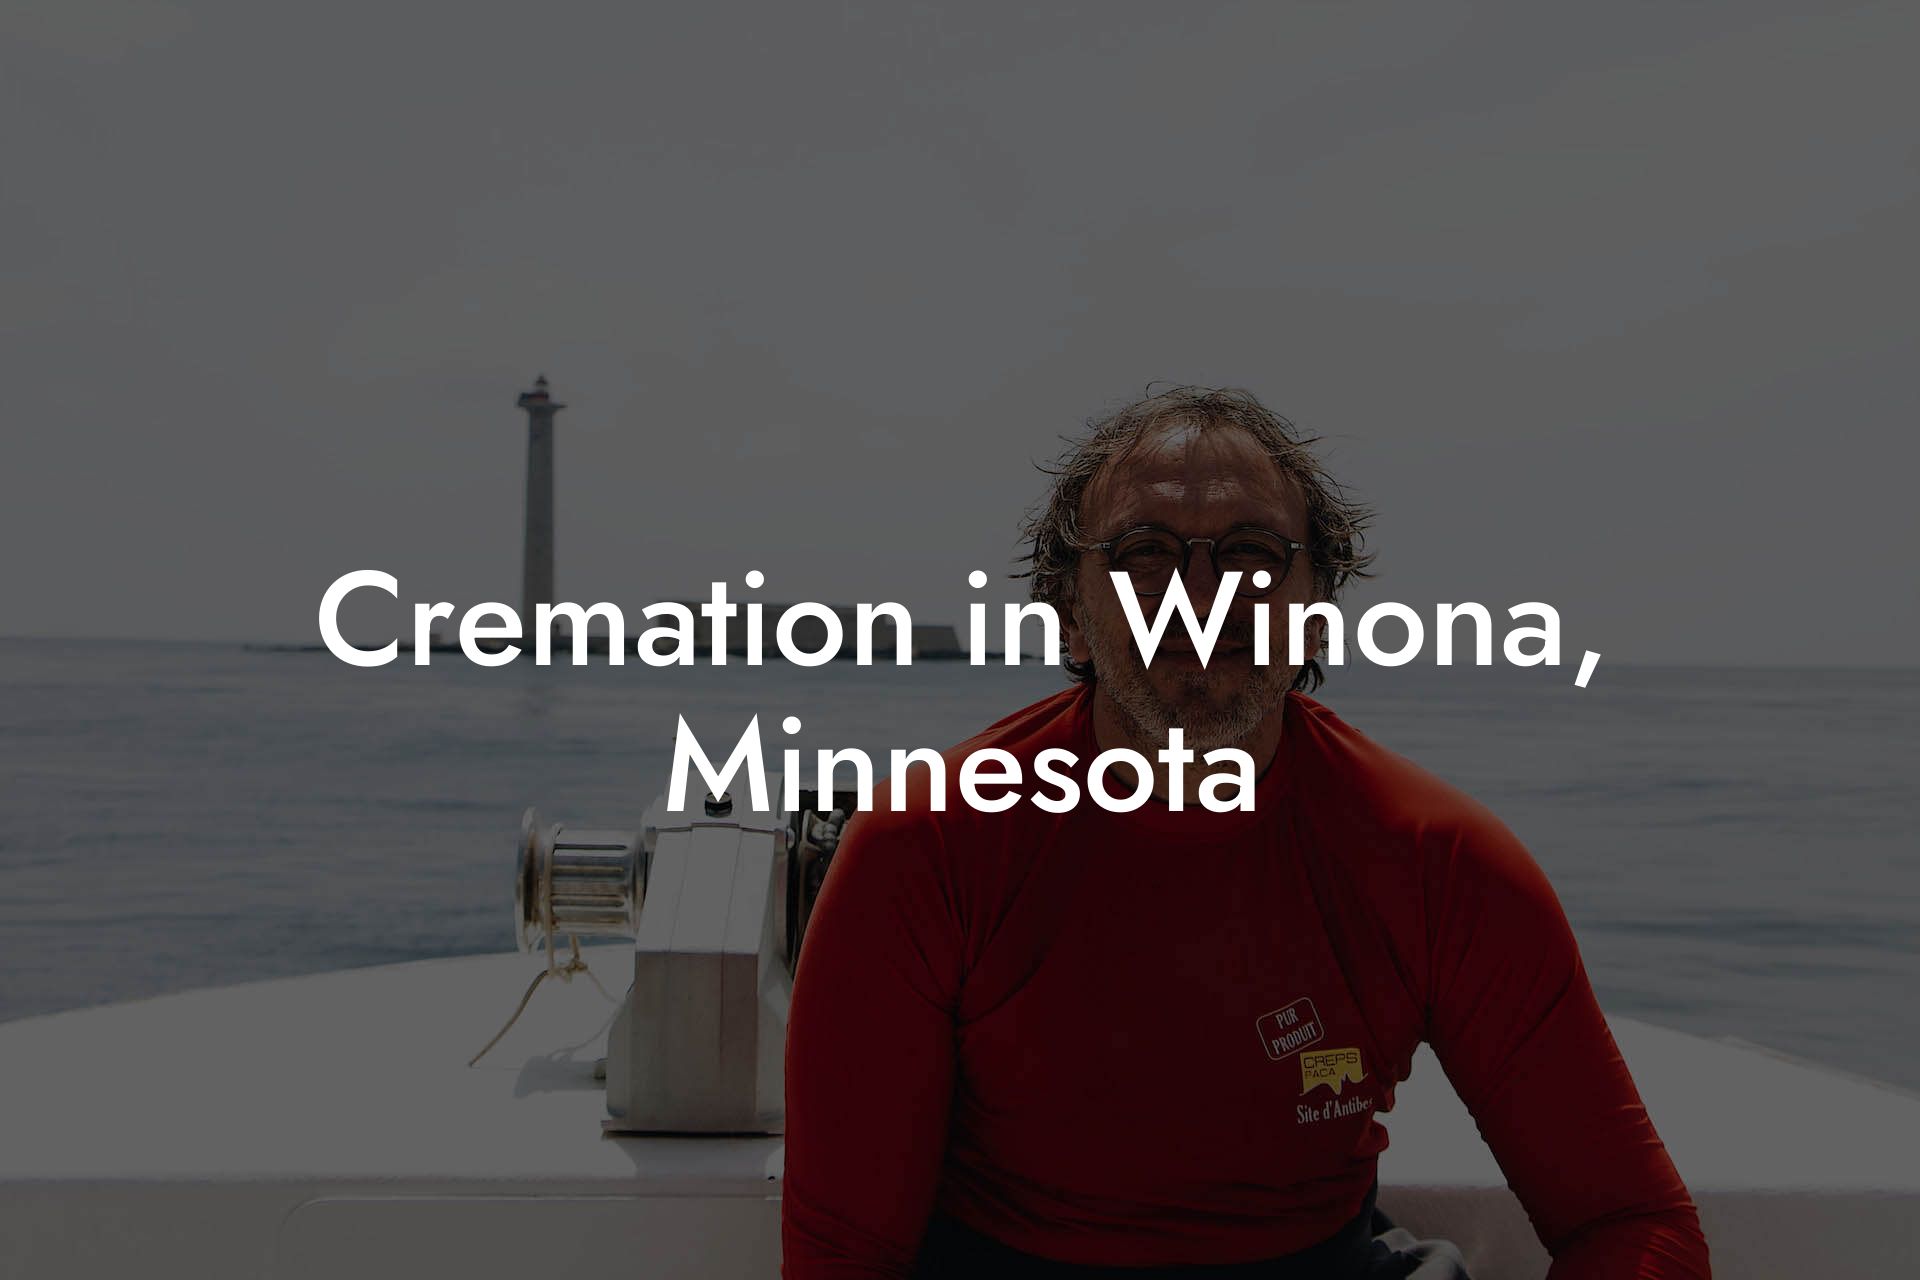 Cremation in Winona, Minnesota